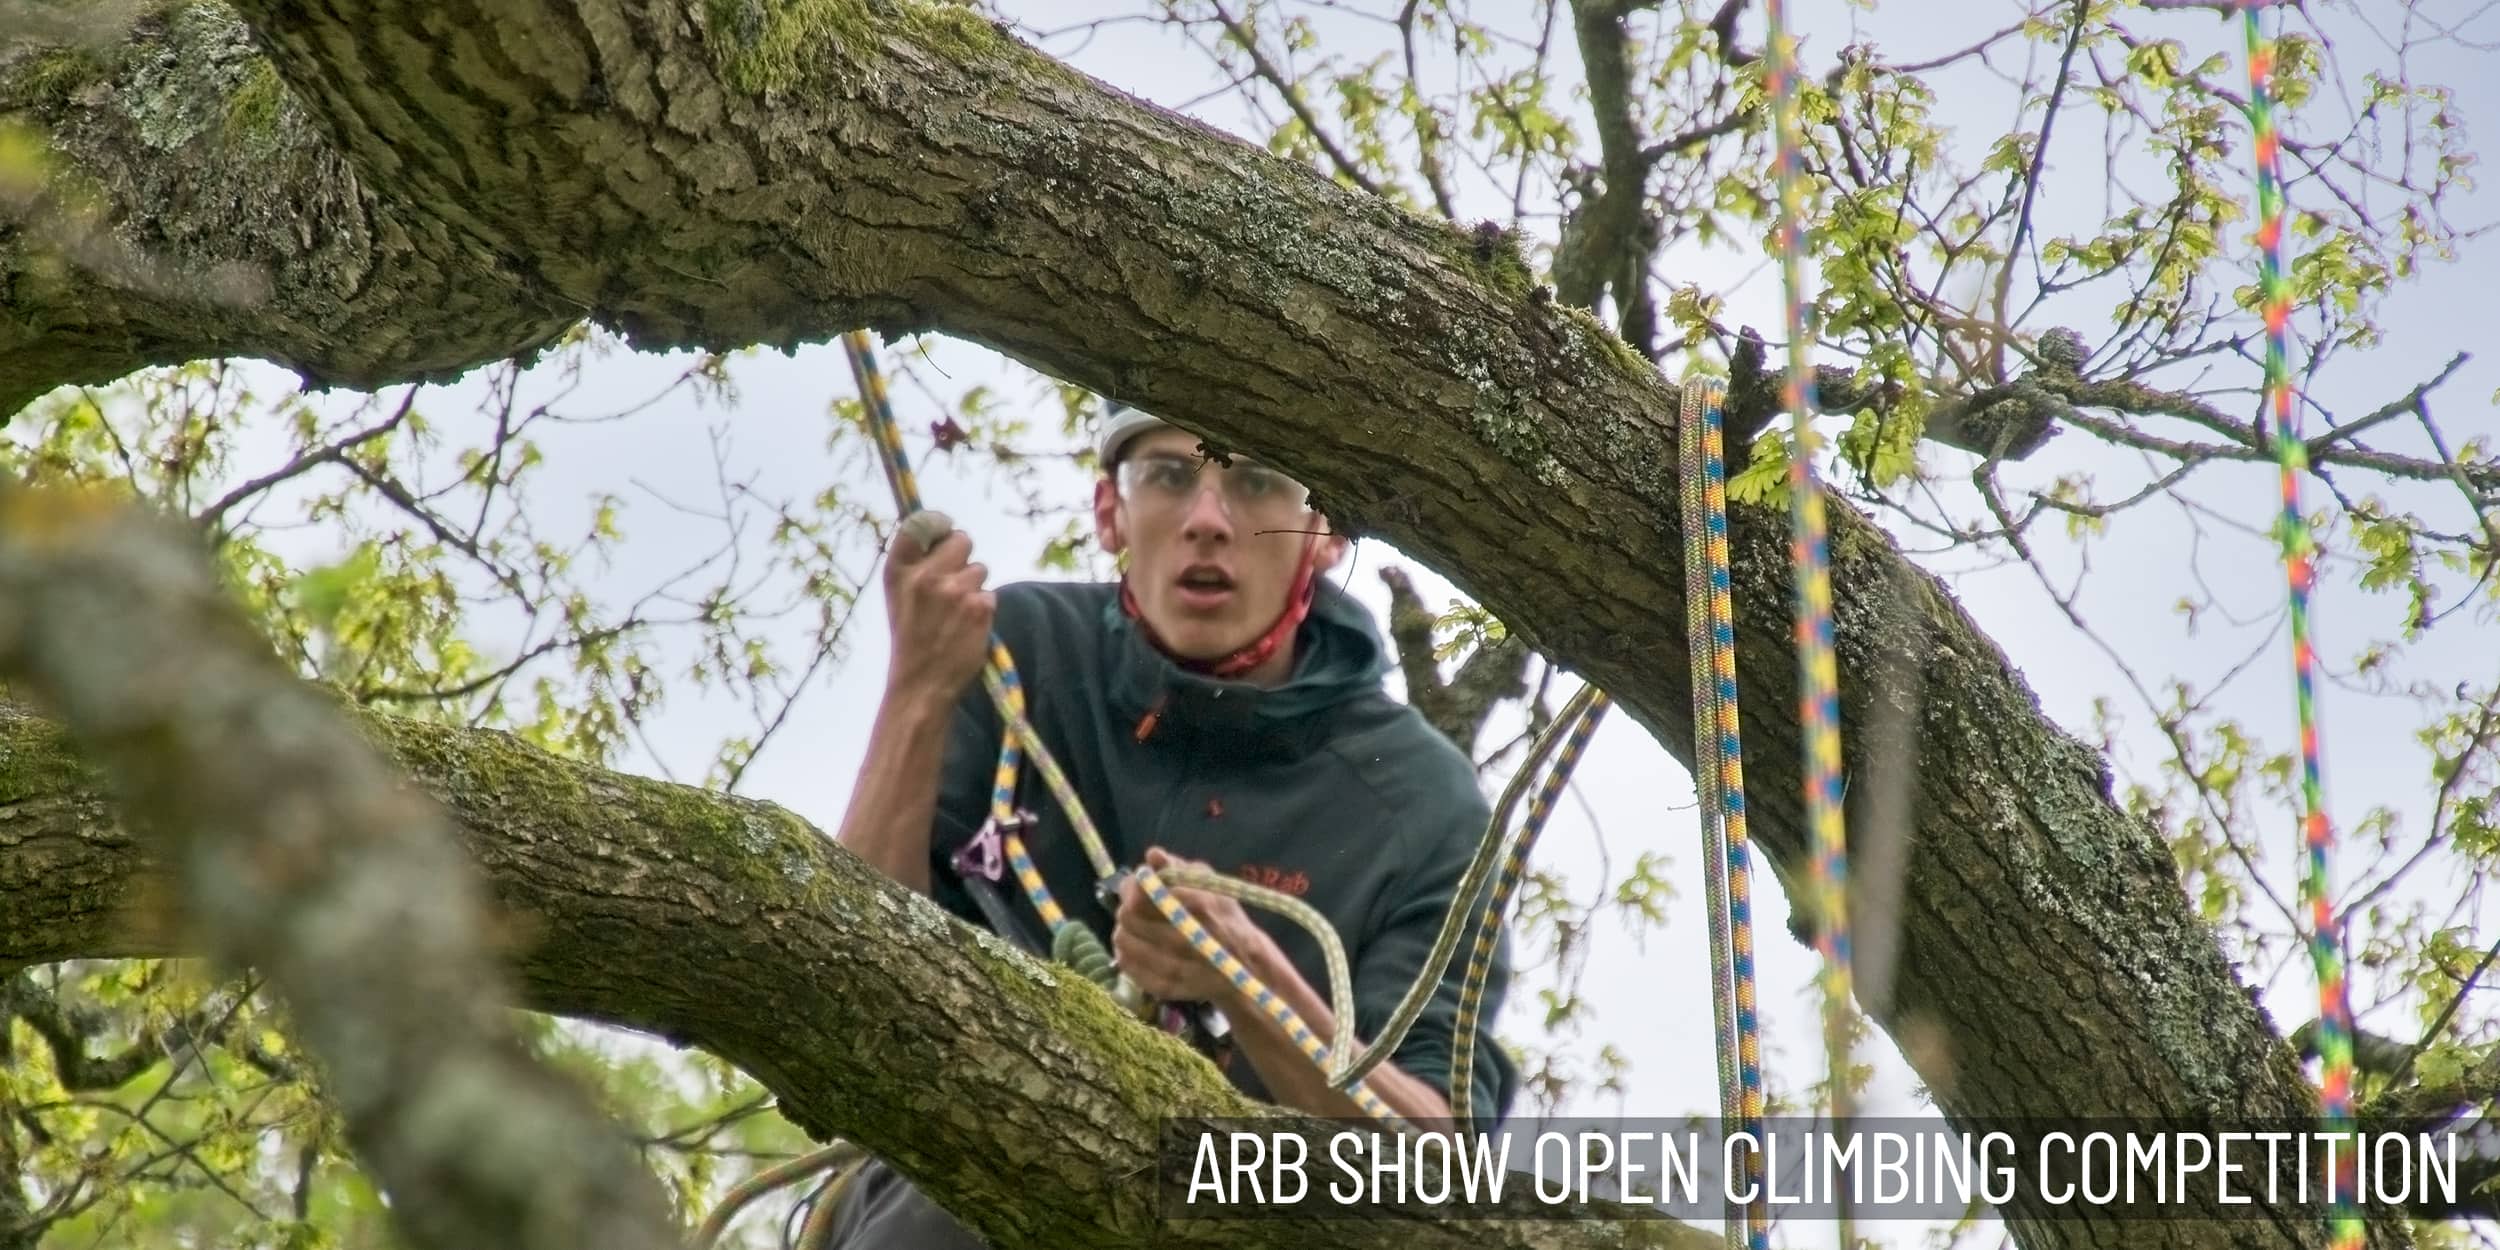 The ARB Show Open Climbing Competiton